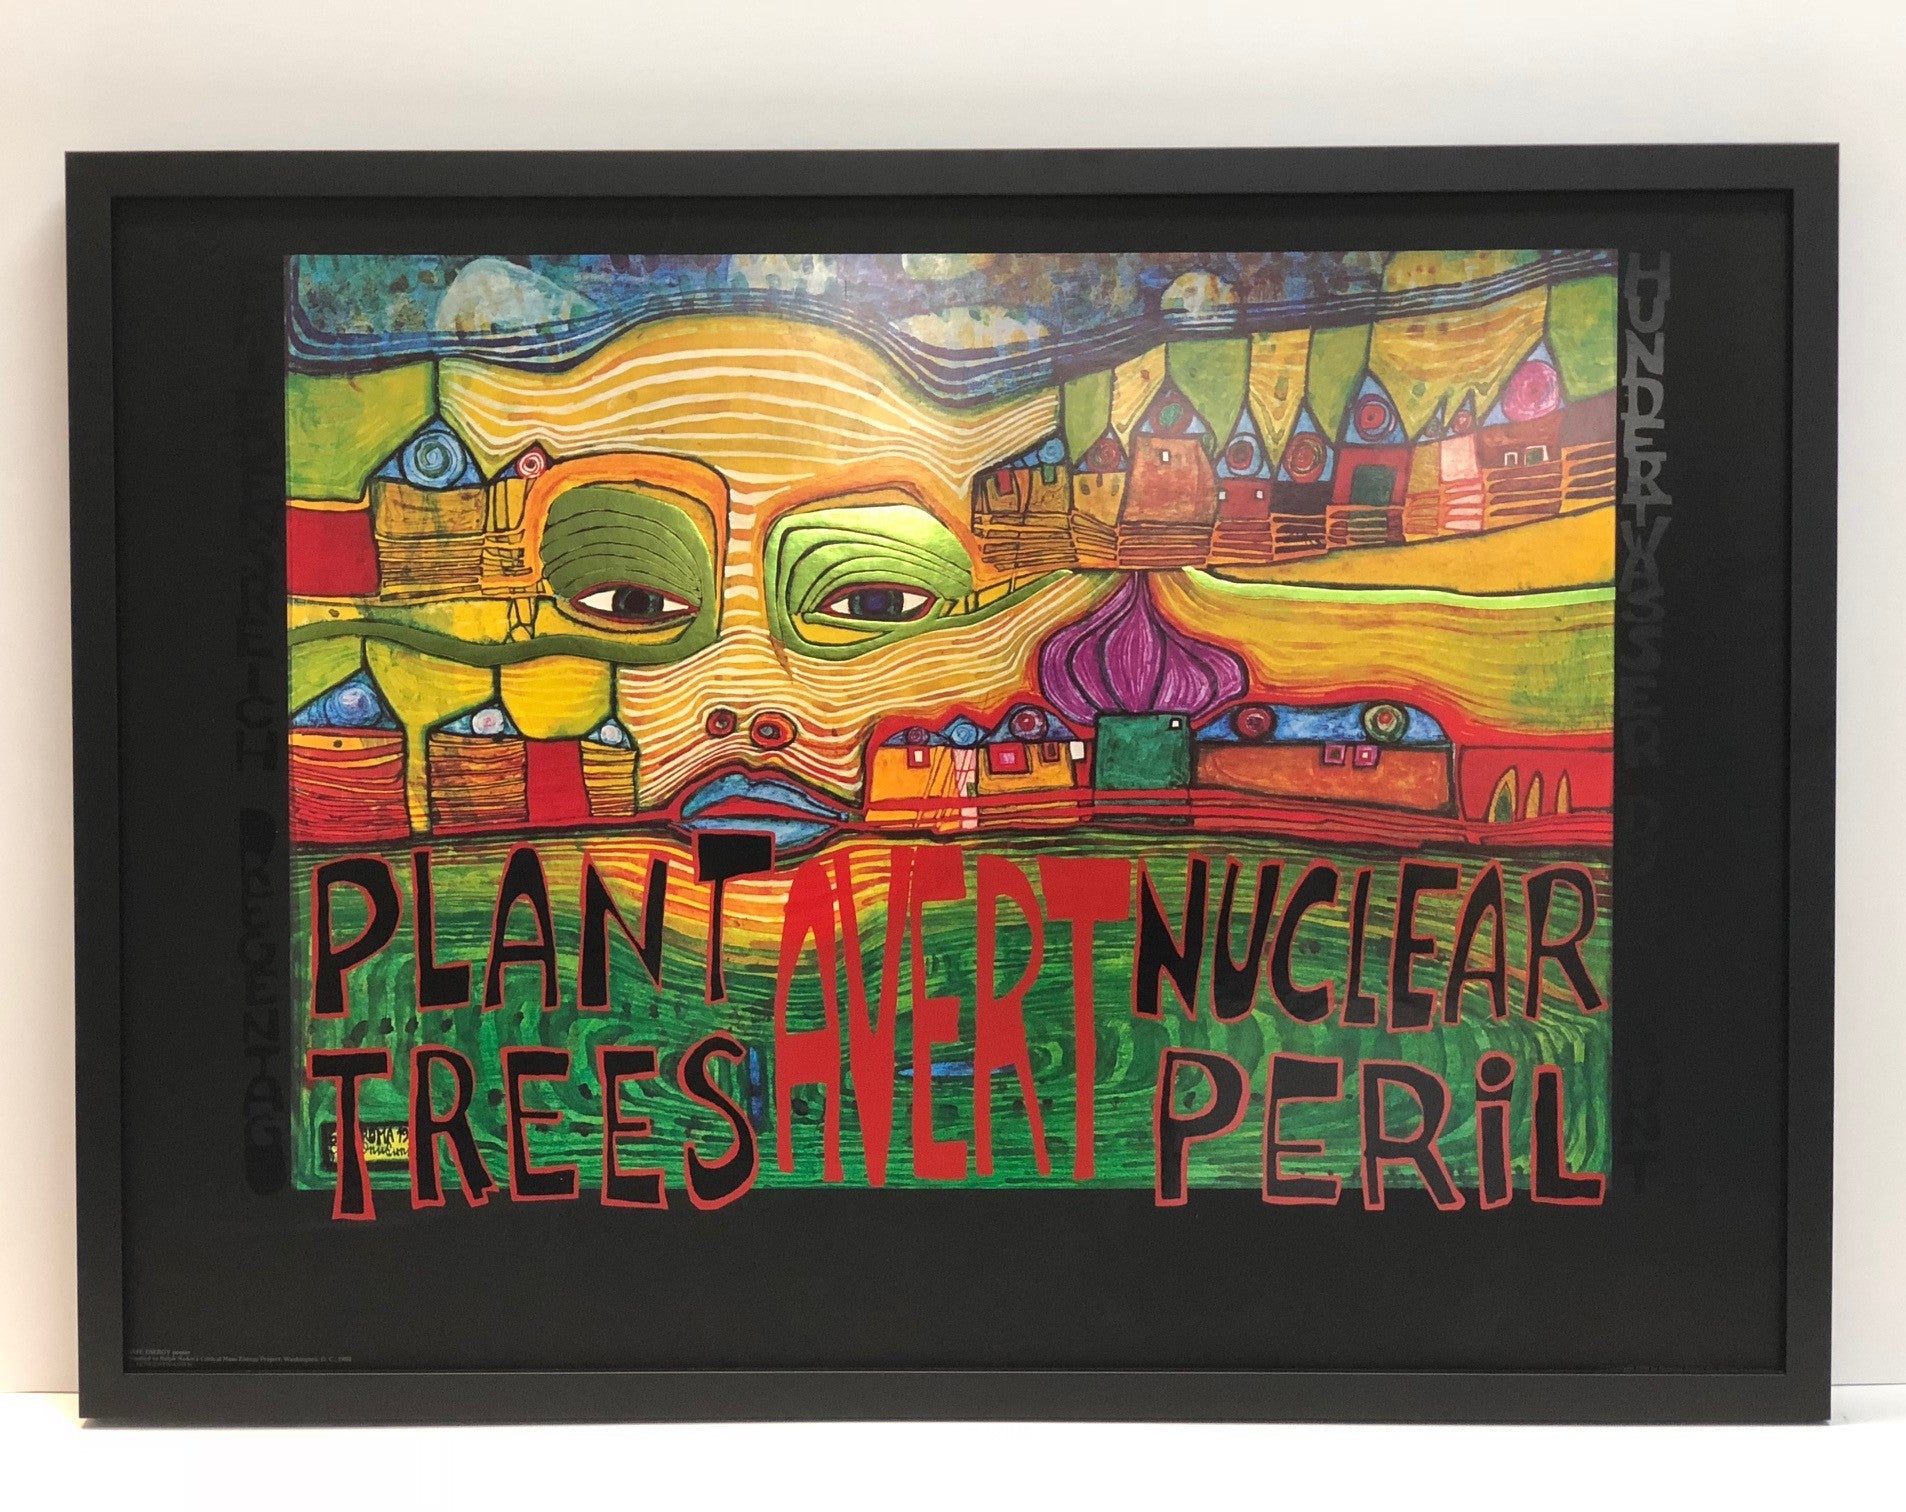 Friedensreich Hundertwasser "Plant Trees Avert Nuclear Peril"